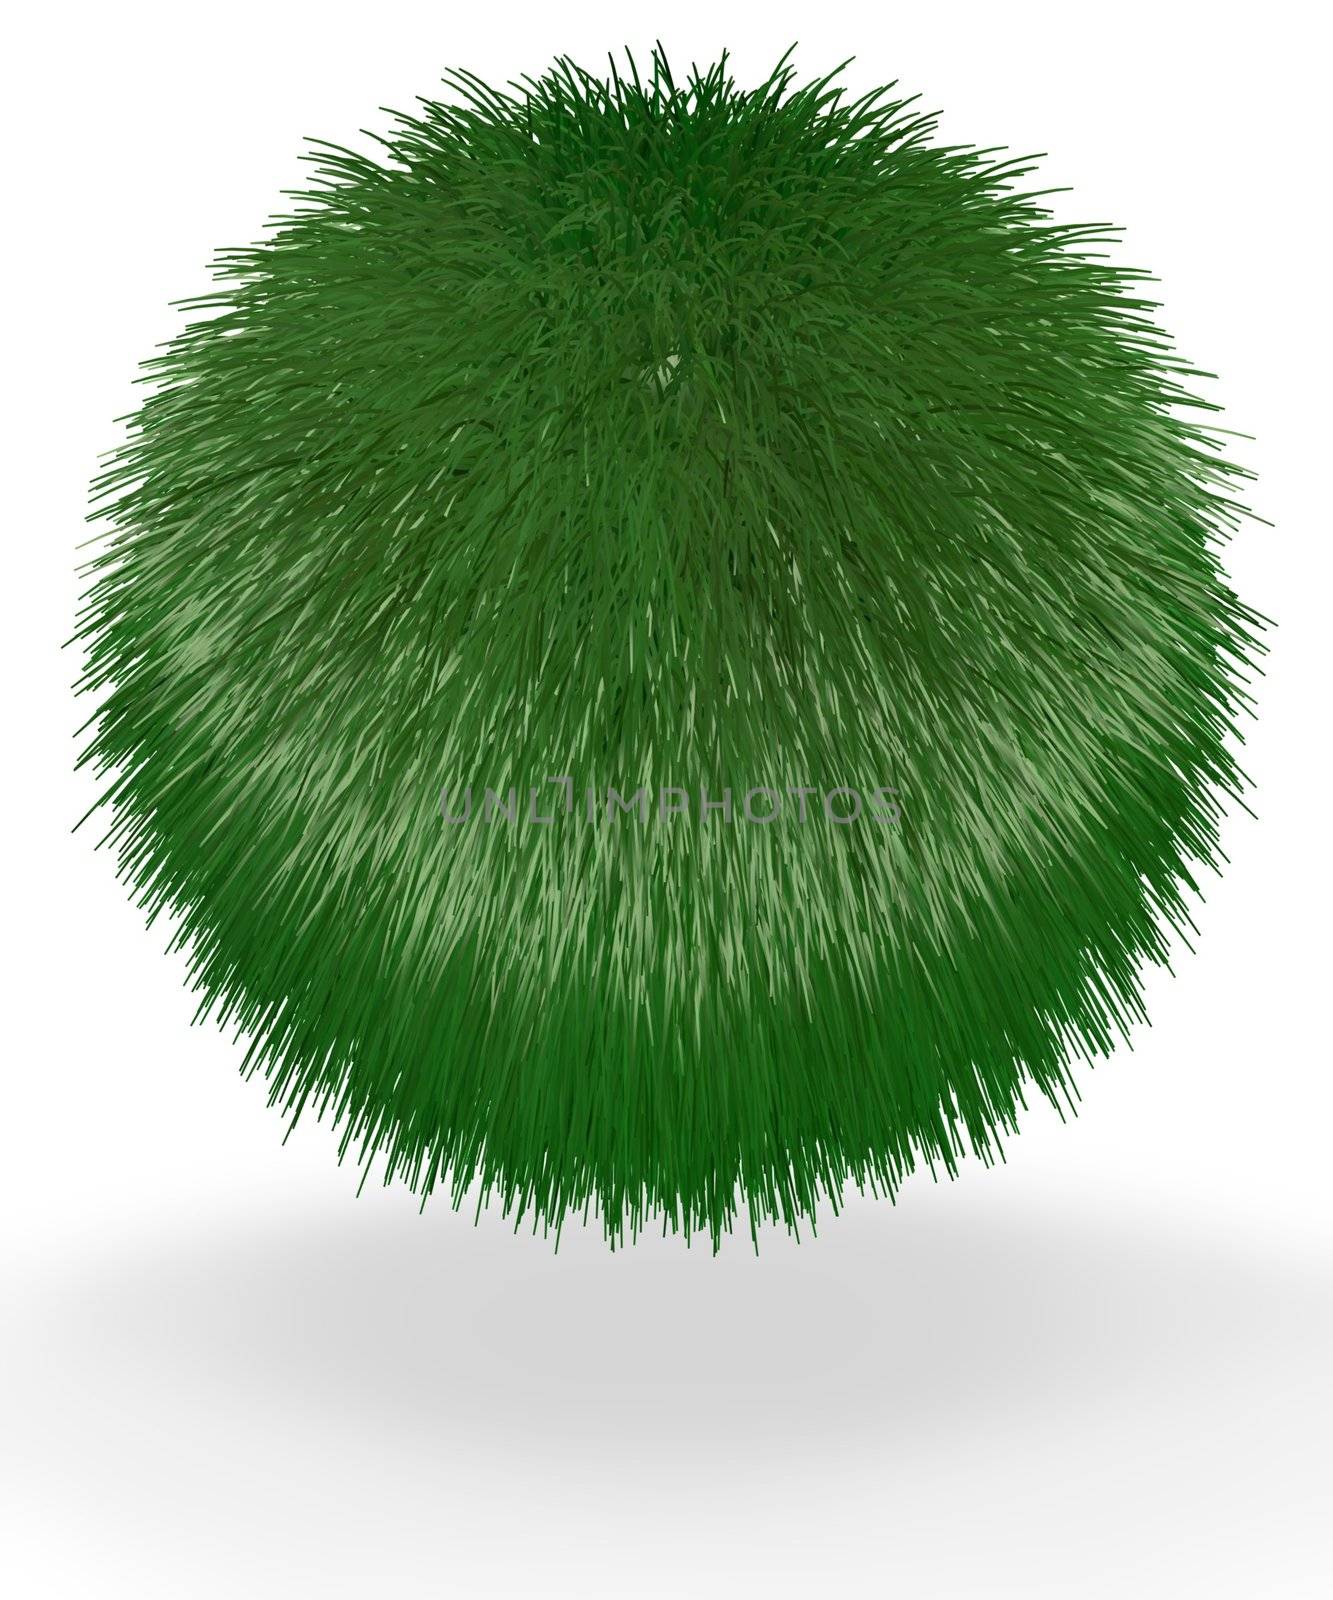 Ball of Green Short Grass  by LeoBlanchette